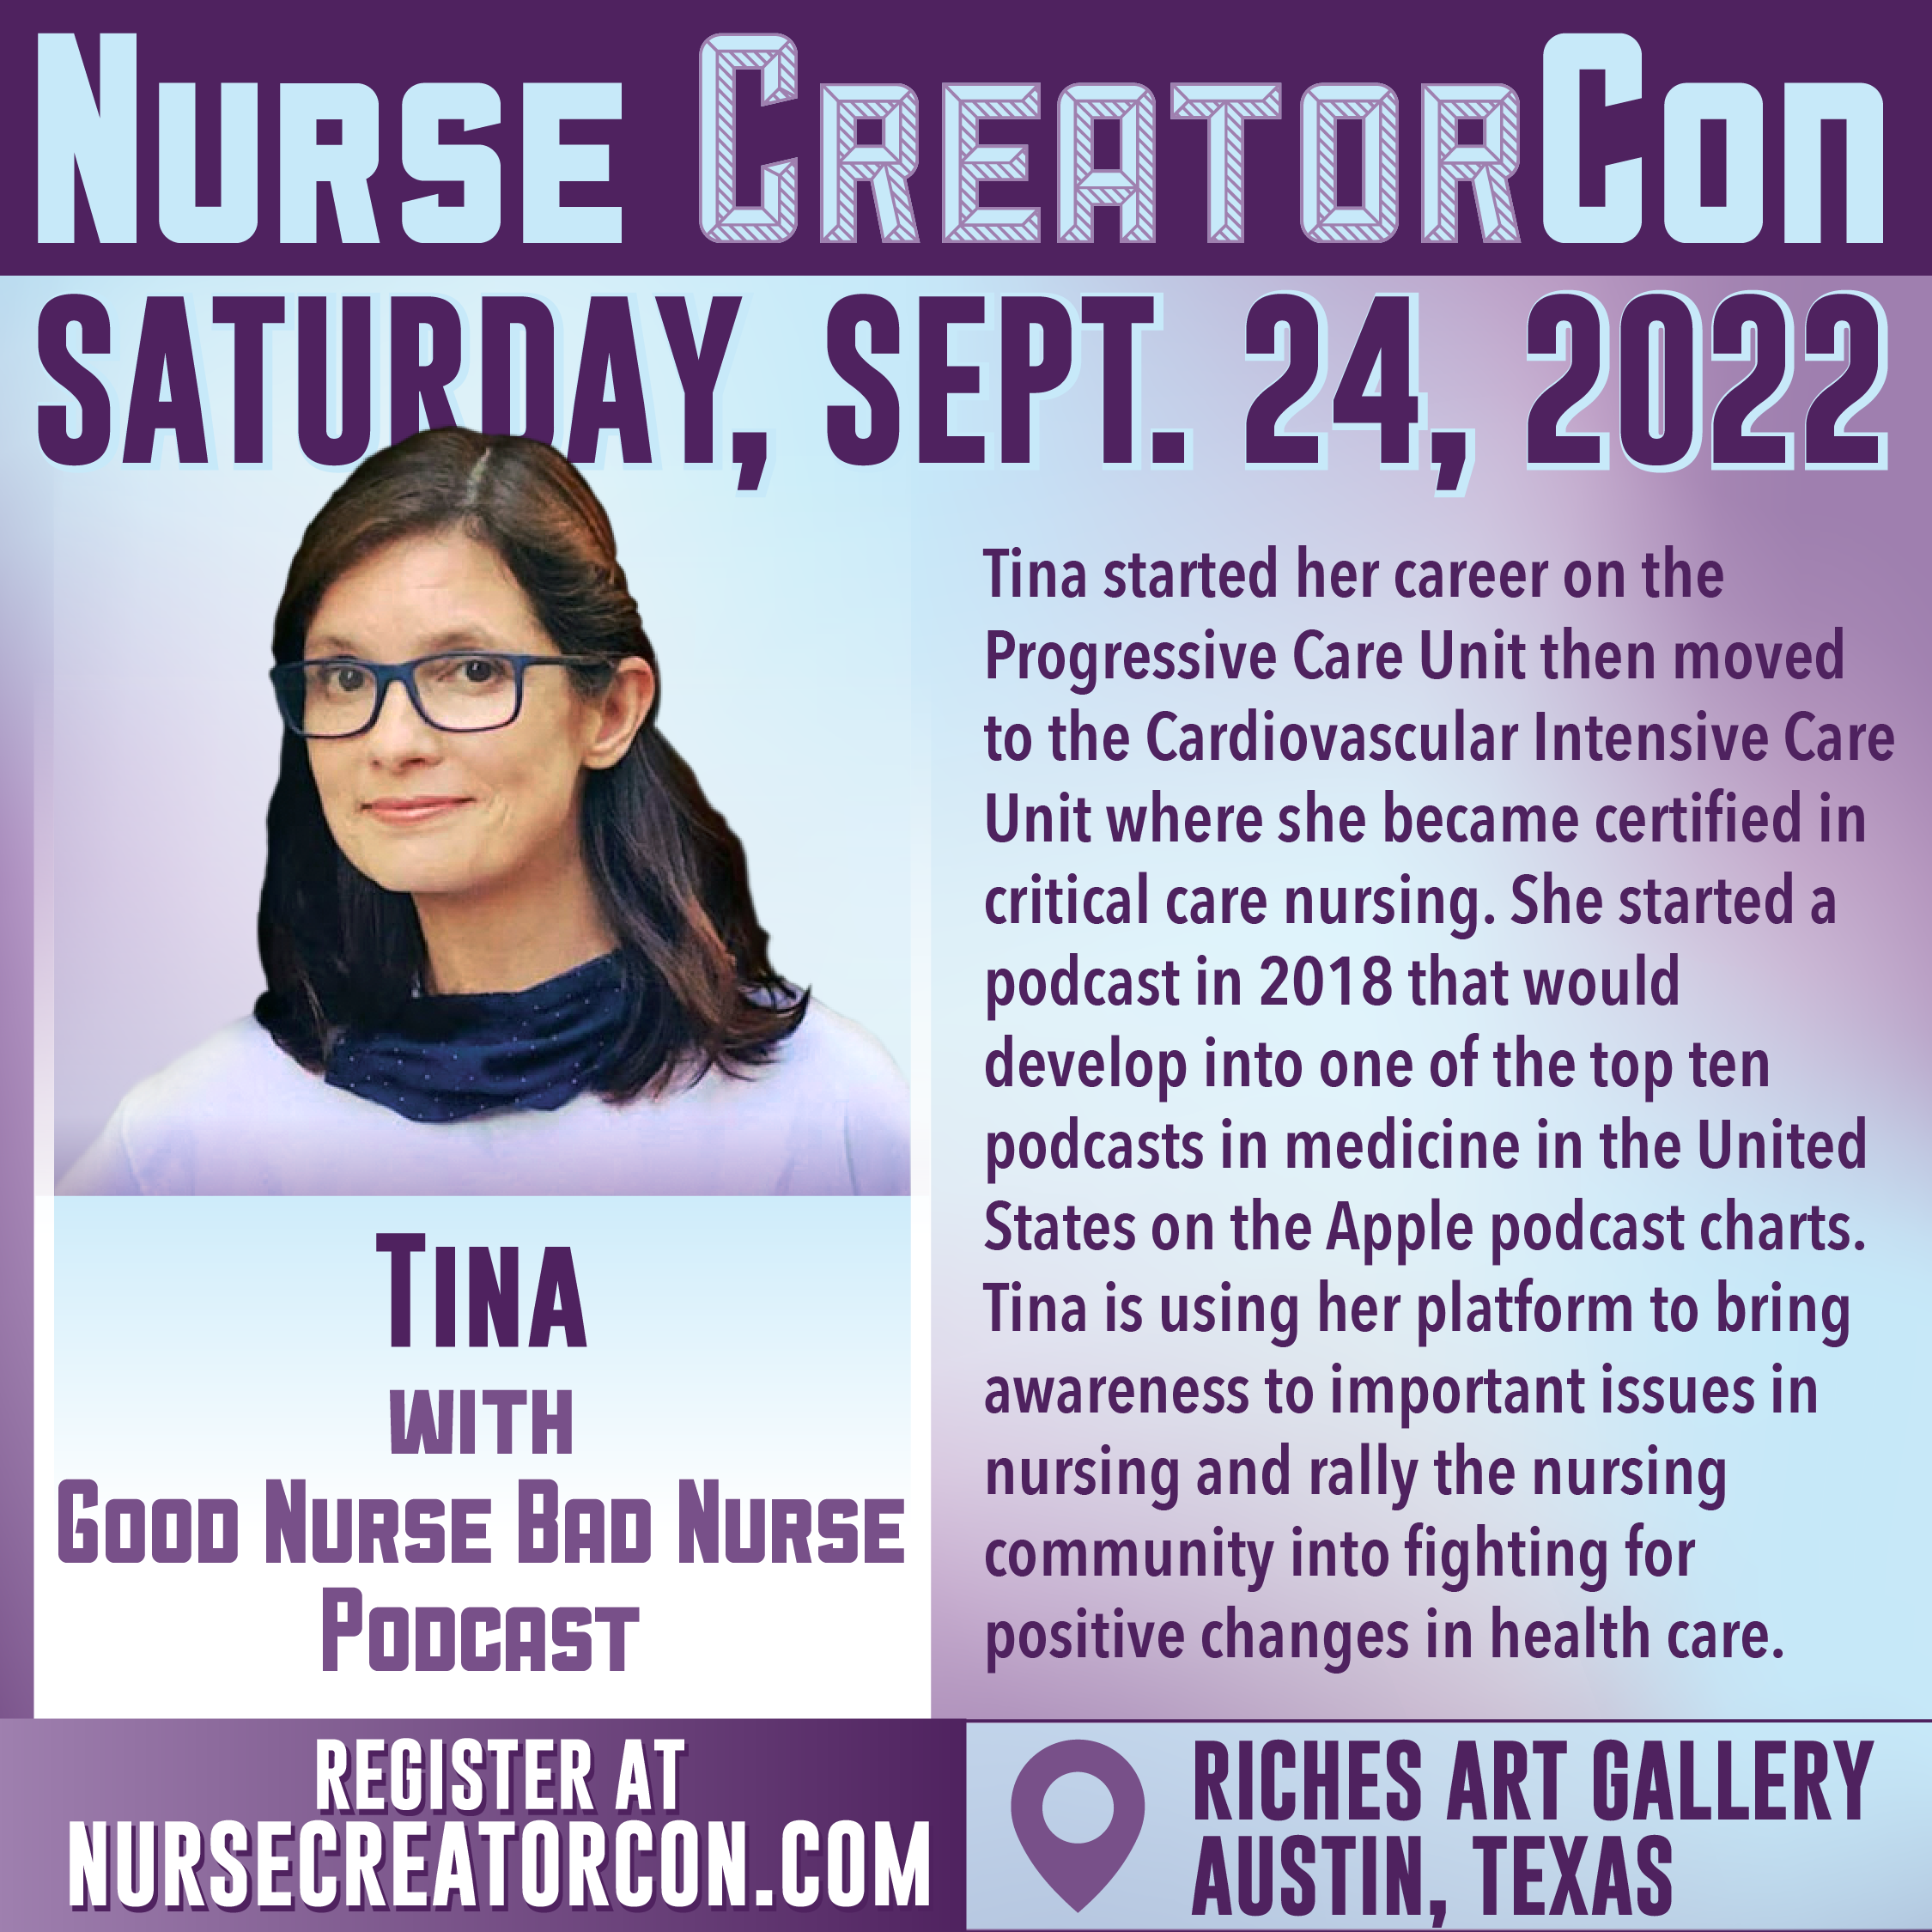 Tina with Good Nurse Bad Nurse